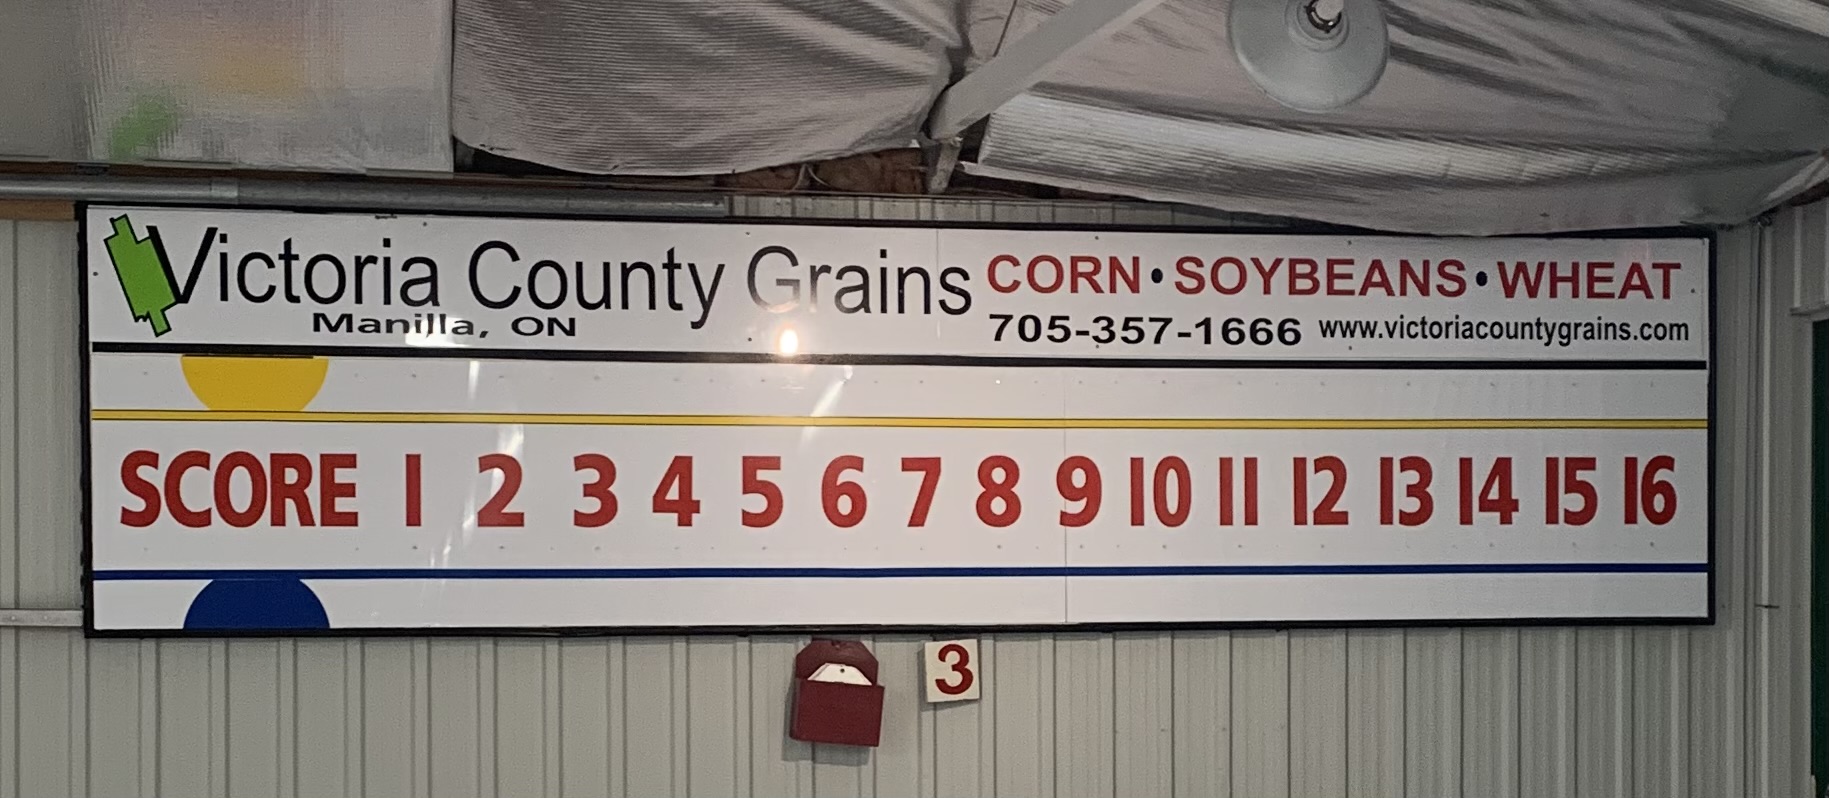 Sponsor:Victoria County Grains